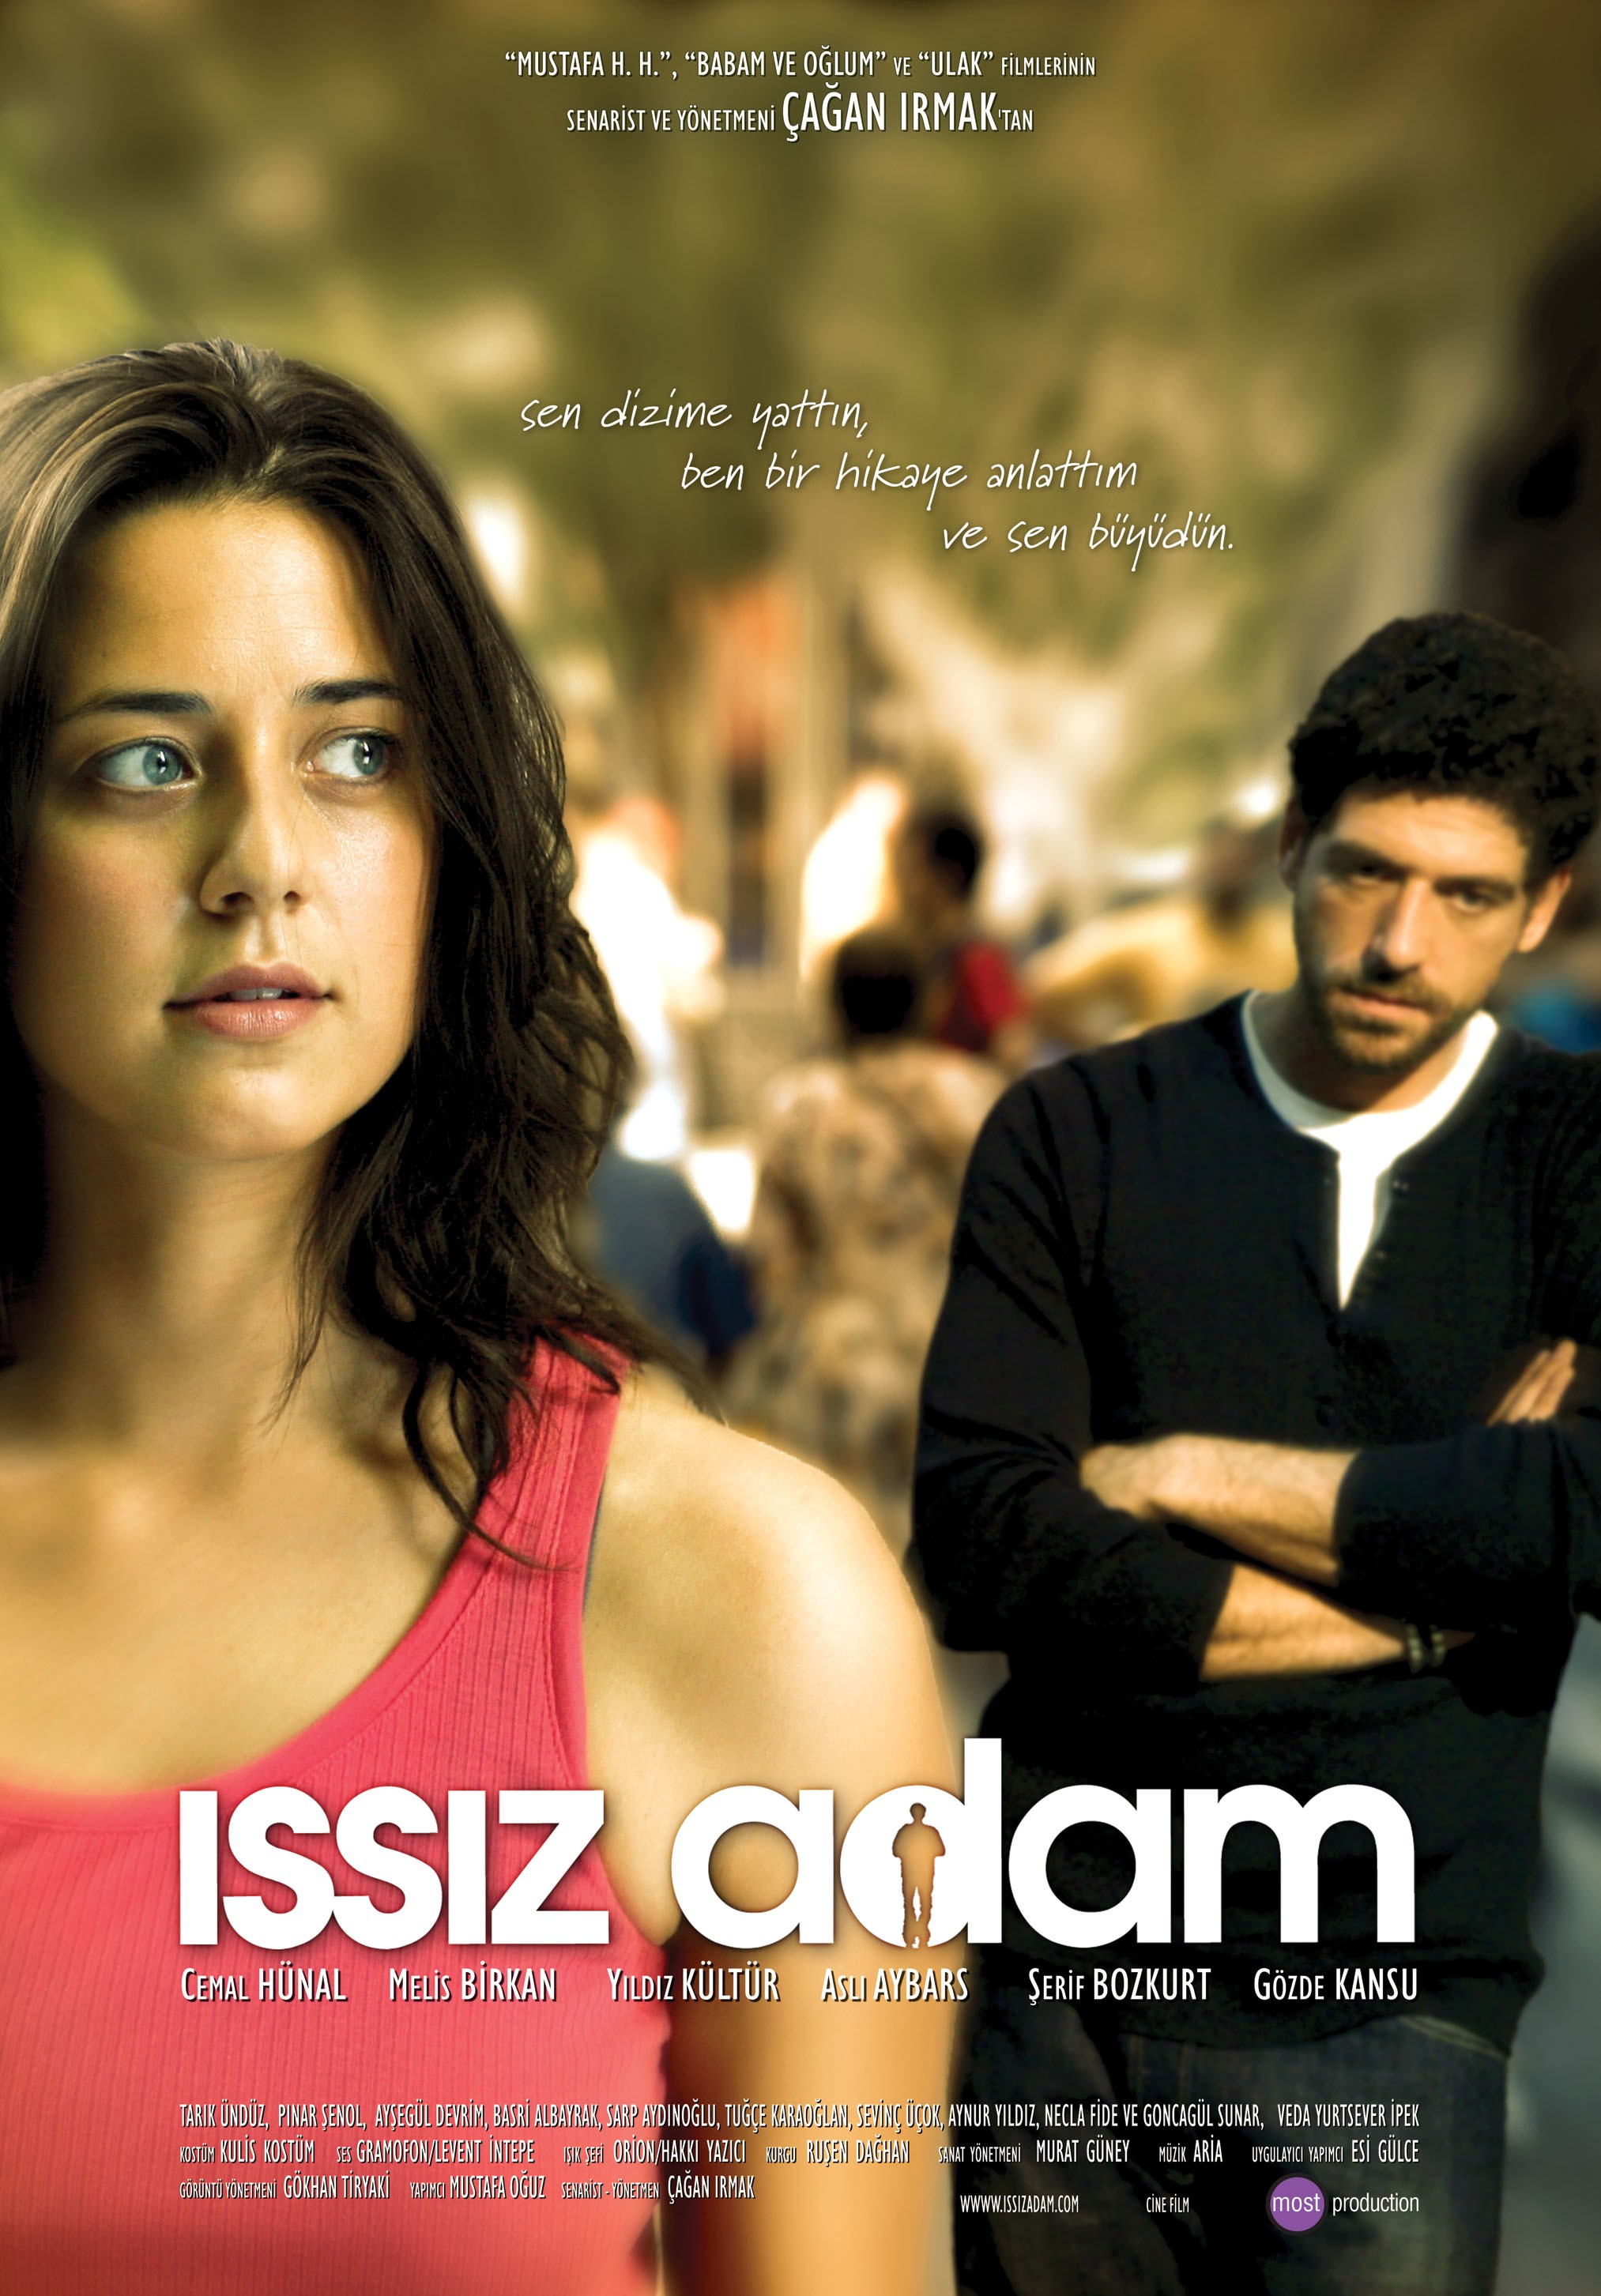 Mega Sized Movie Poster Image for Issiz adam 